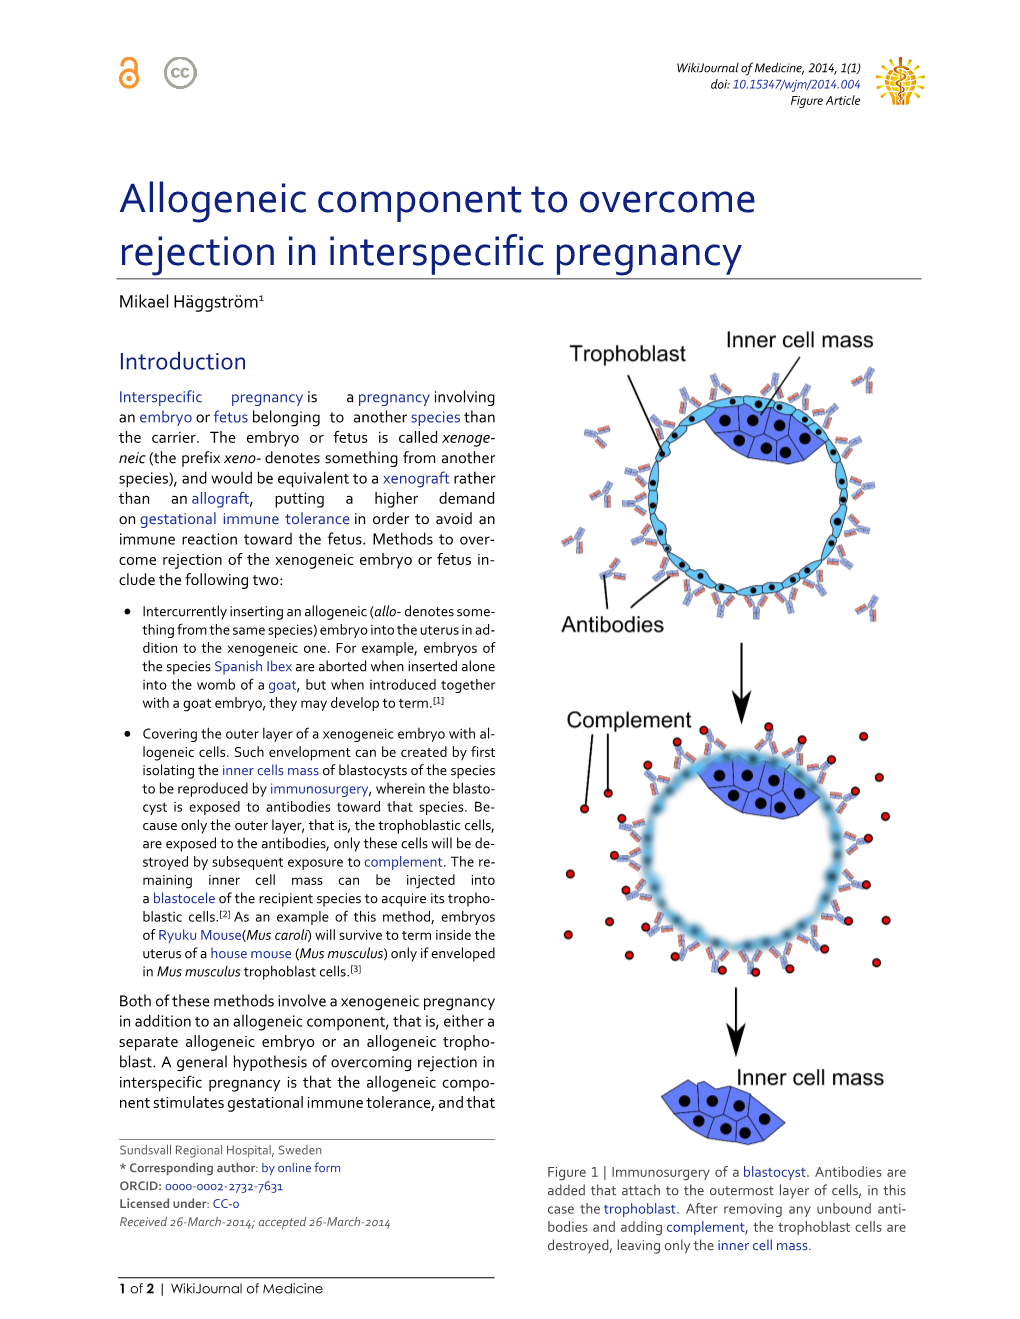 Allogeneic Component to Overcome Rejection in Interspecific Pregnancy Mikael Häggström1